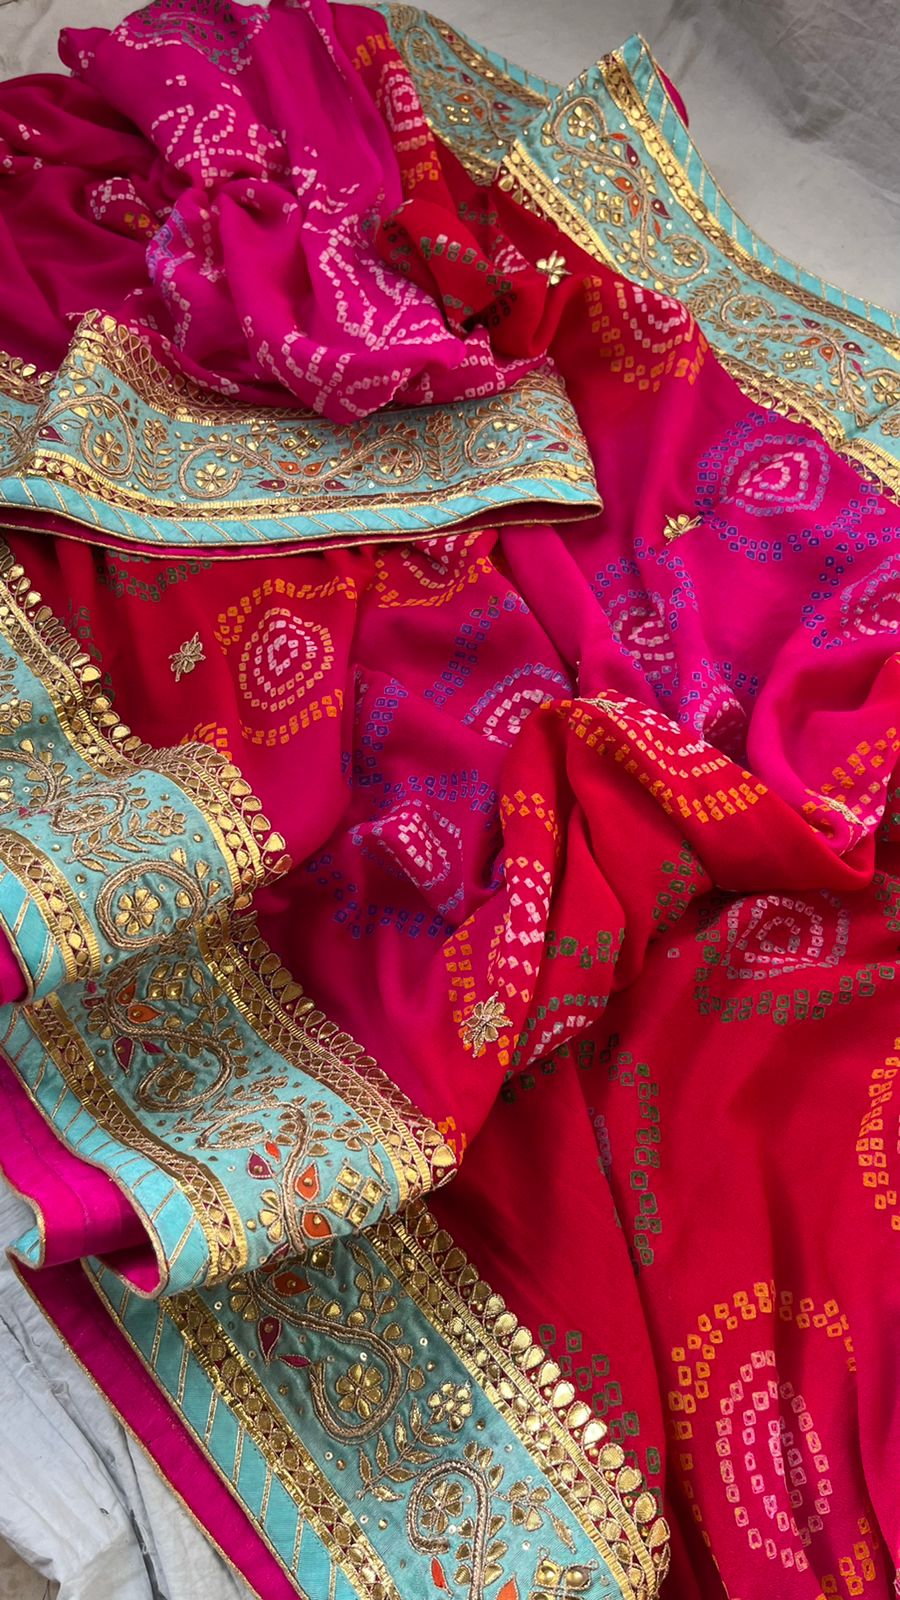 Bandhej gorgette crepe Indian sari